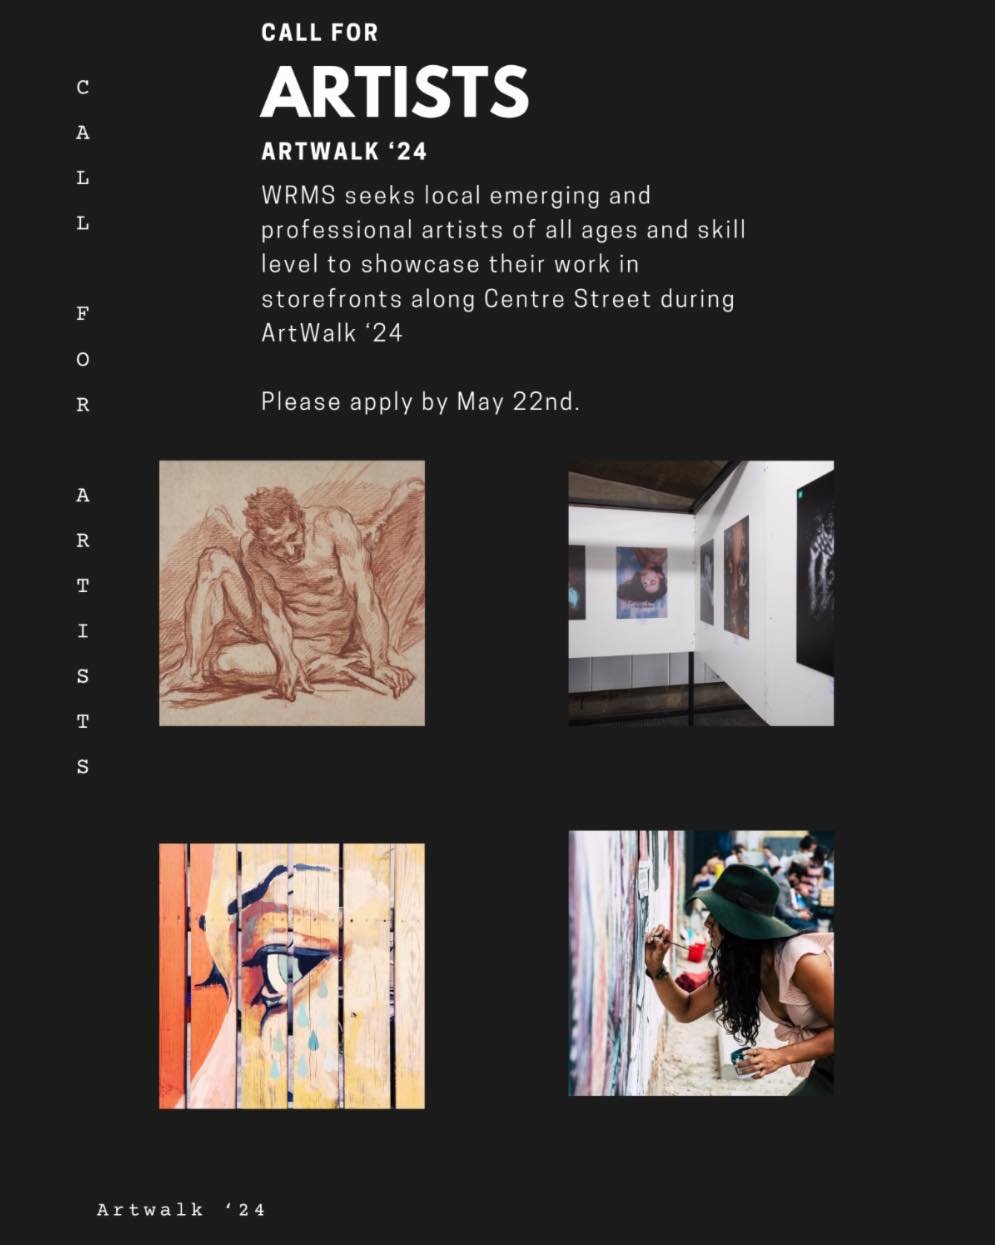 ArtWalk call for artists! Submission date May 22. 

Email director@wrms.org for submission link 

😃🎨 #bostonartscene #westroxburyartwalk #bostonevents #bostonmainstreets #westroxburysmallbusiness #westroxbury #bostonartisans #bostonart